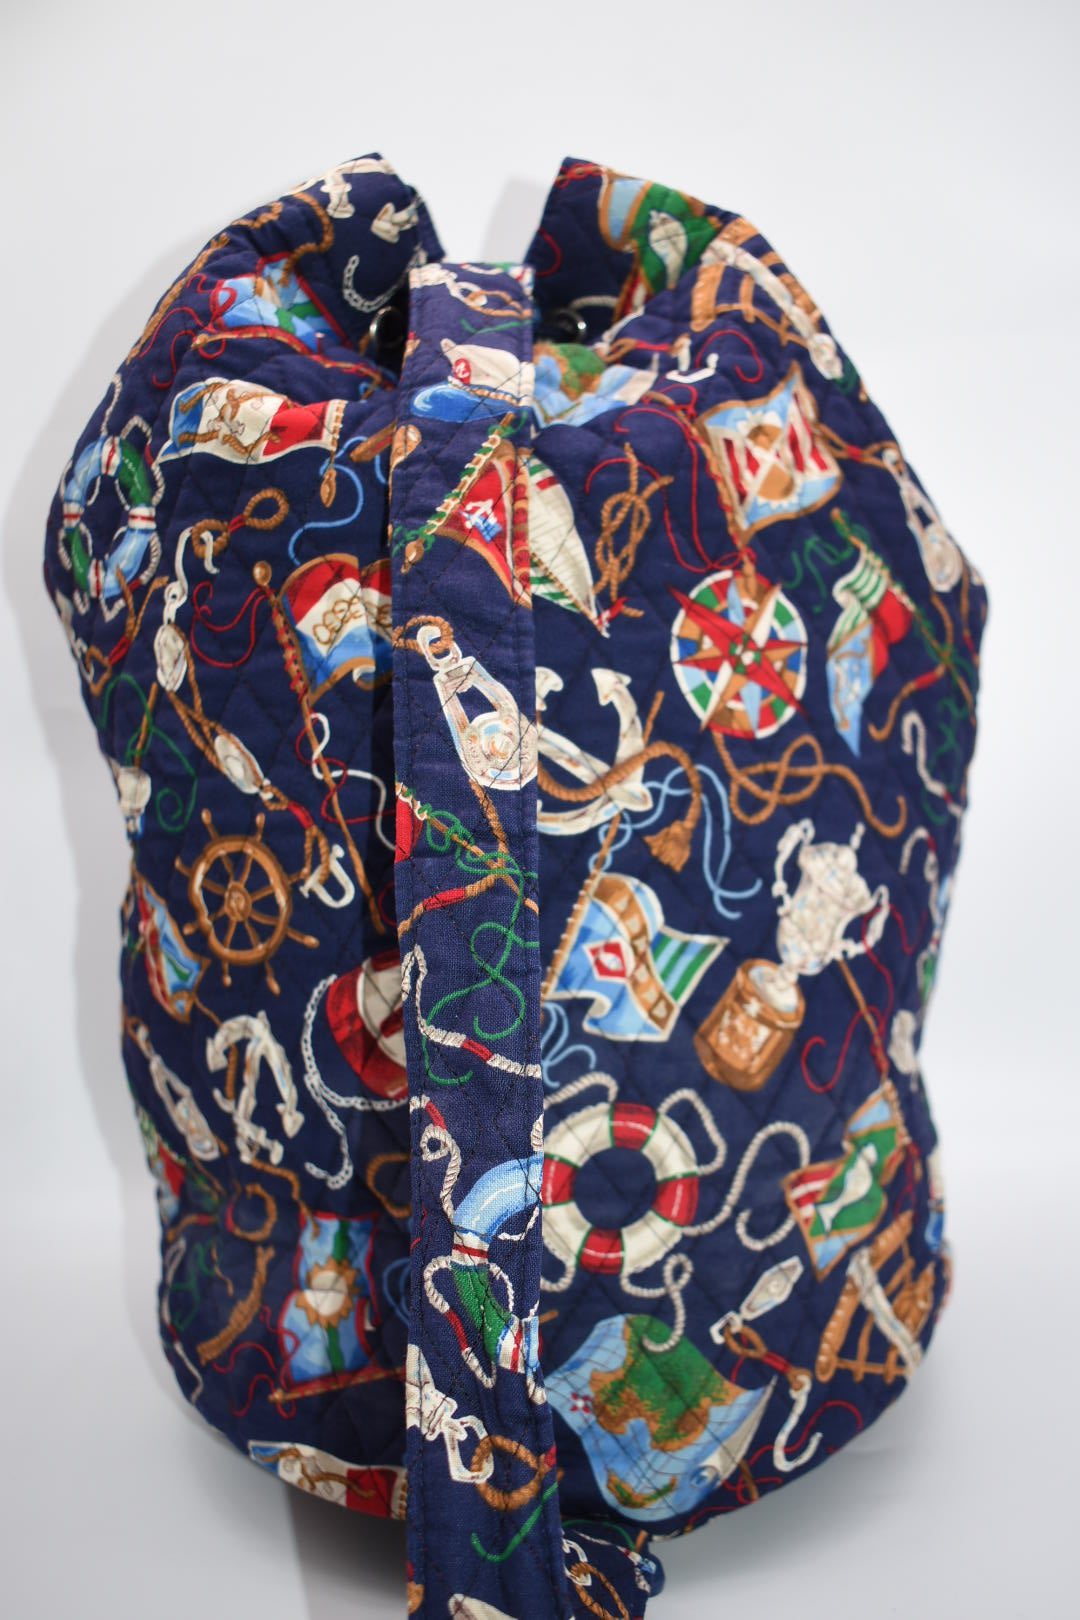 Vintage Vera Bradley Large Sling Bag in "Regatta 1994" Pattern